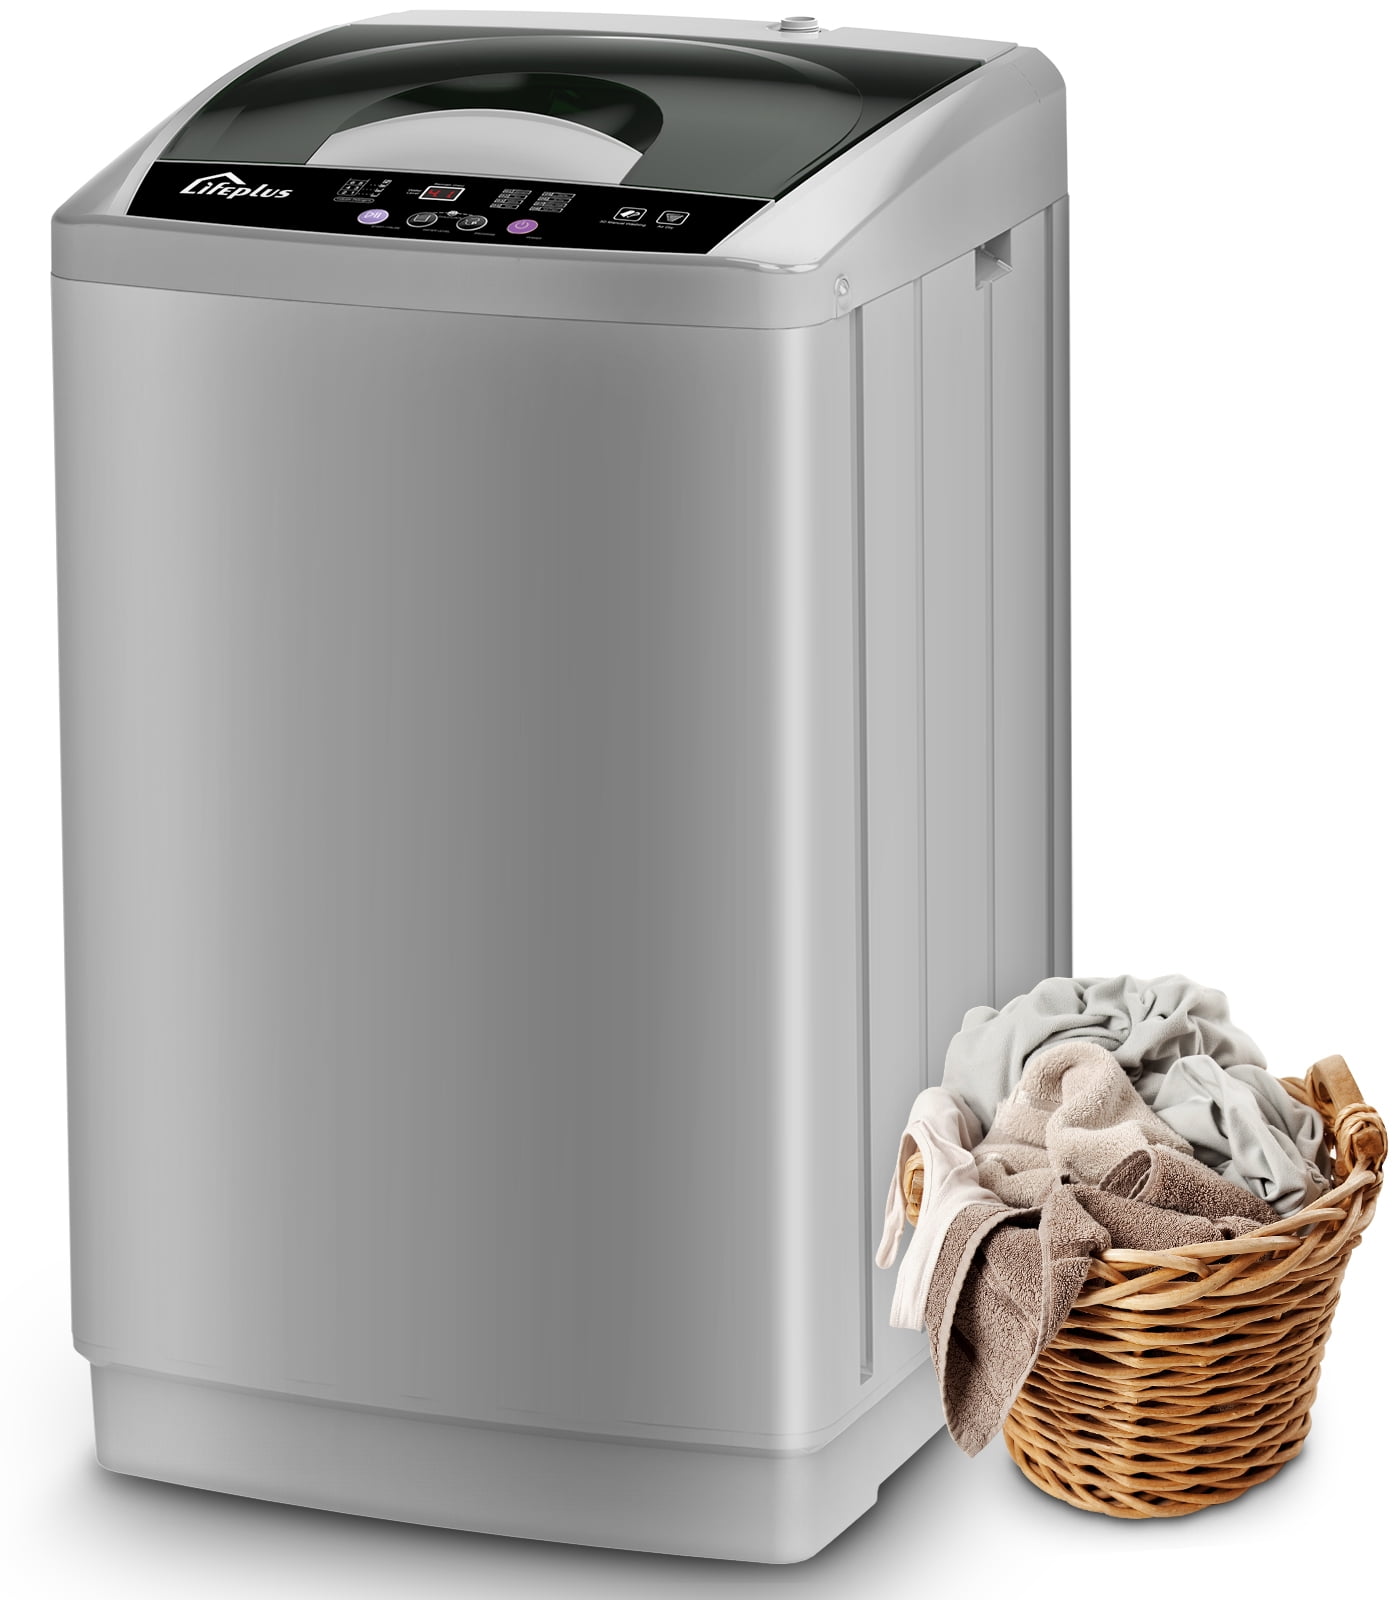 Qhomic 2.1 Cu.ft Portable Washing Machine, 15.6lbs Capacity Fully